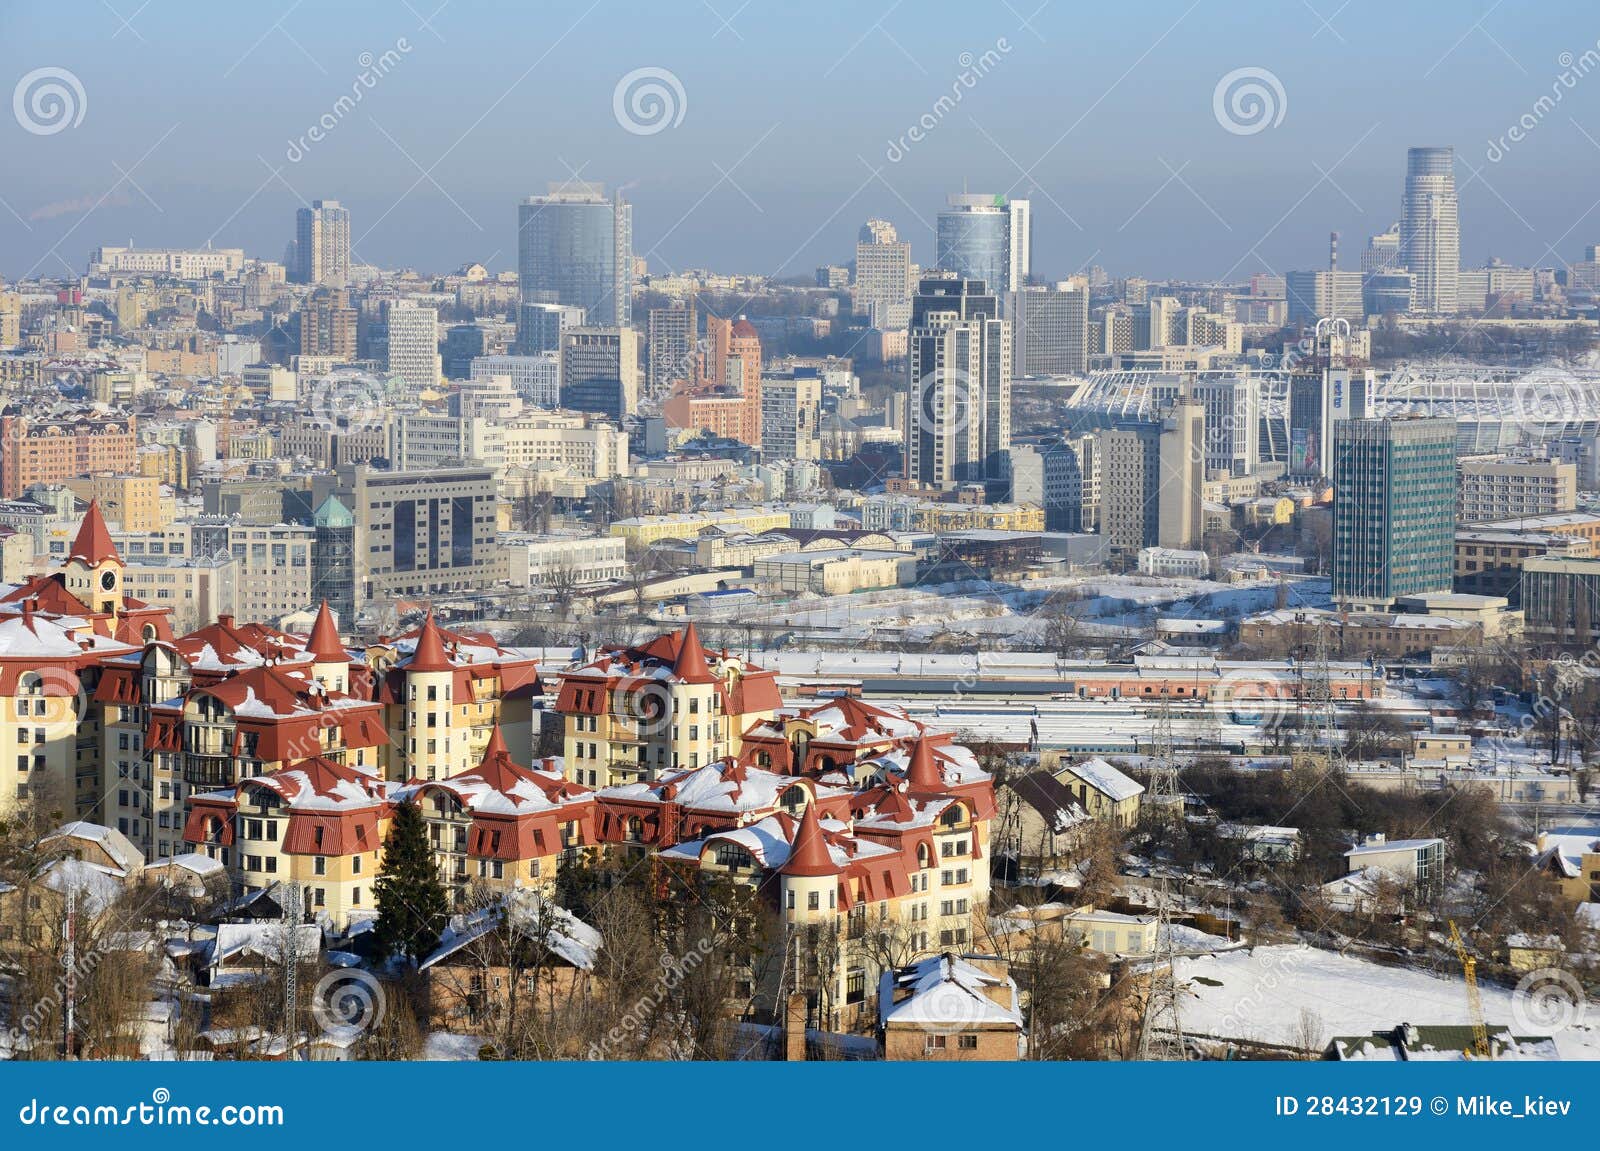 kiev city at winter